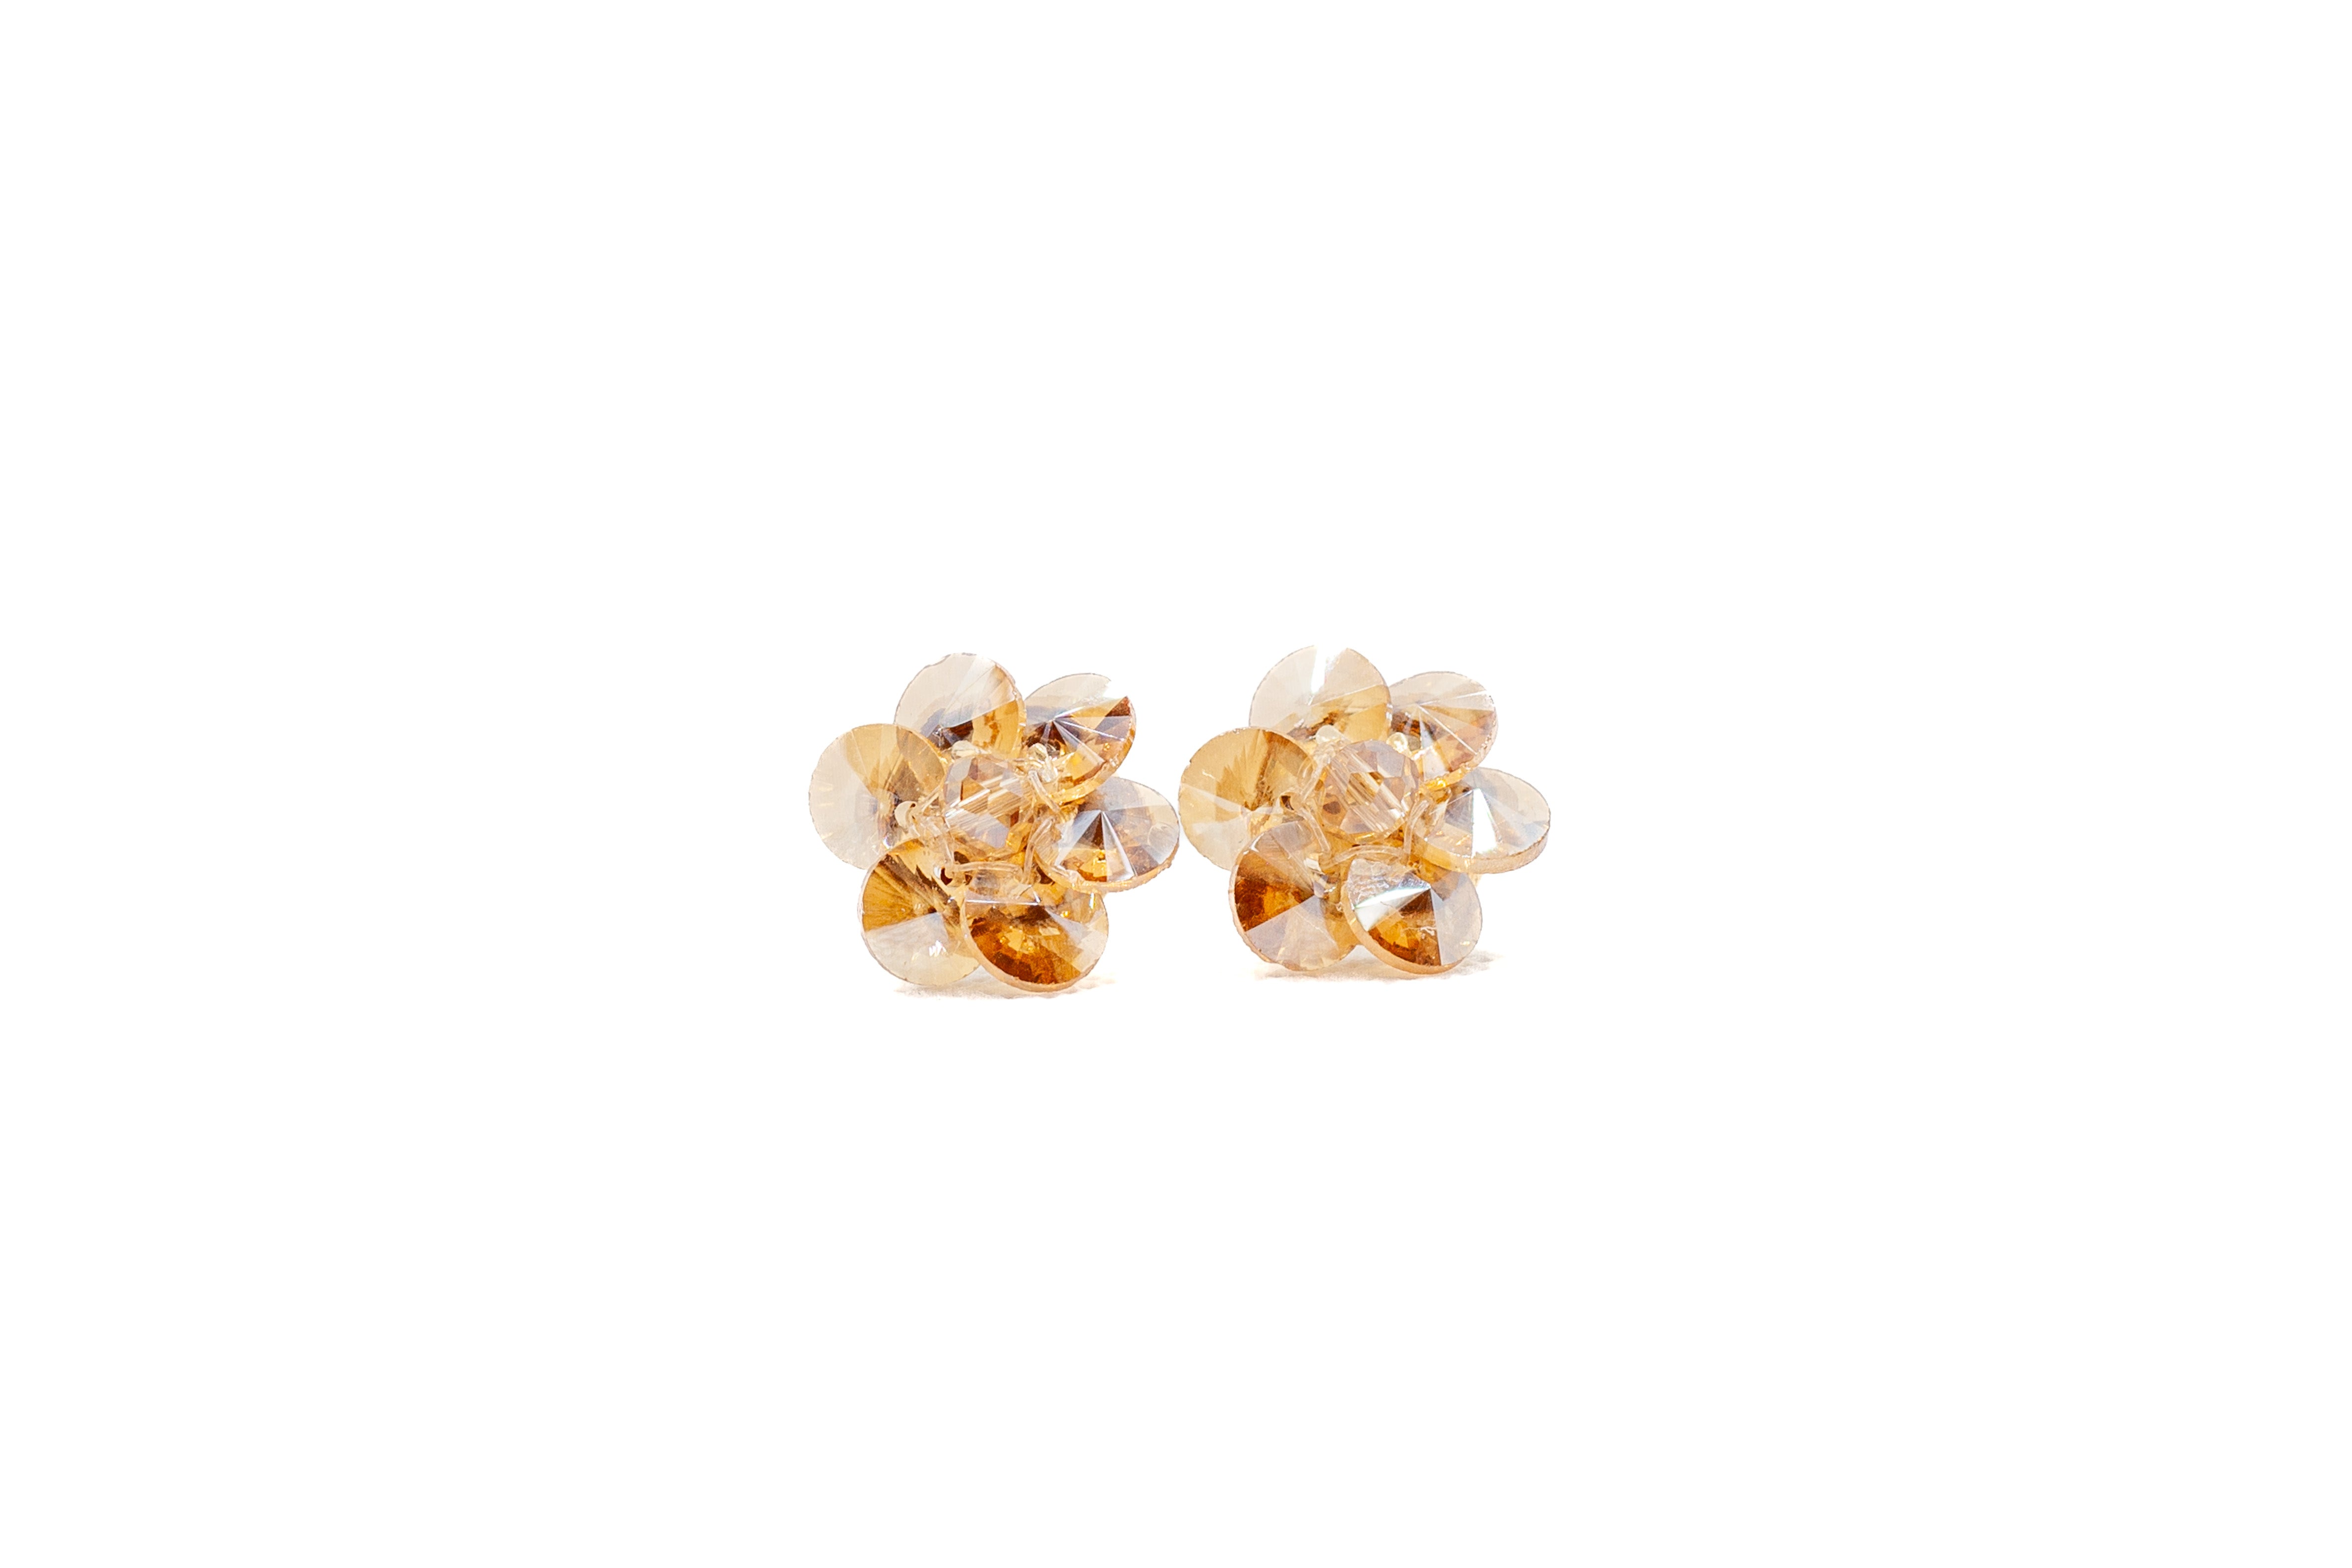 Protea style earrings